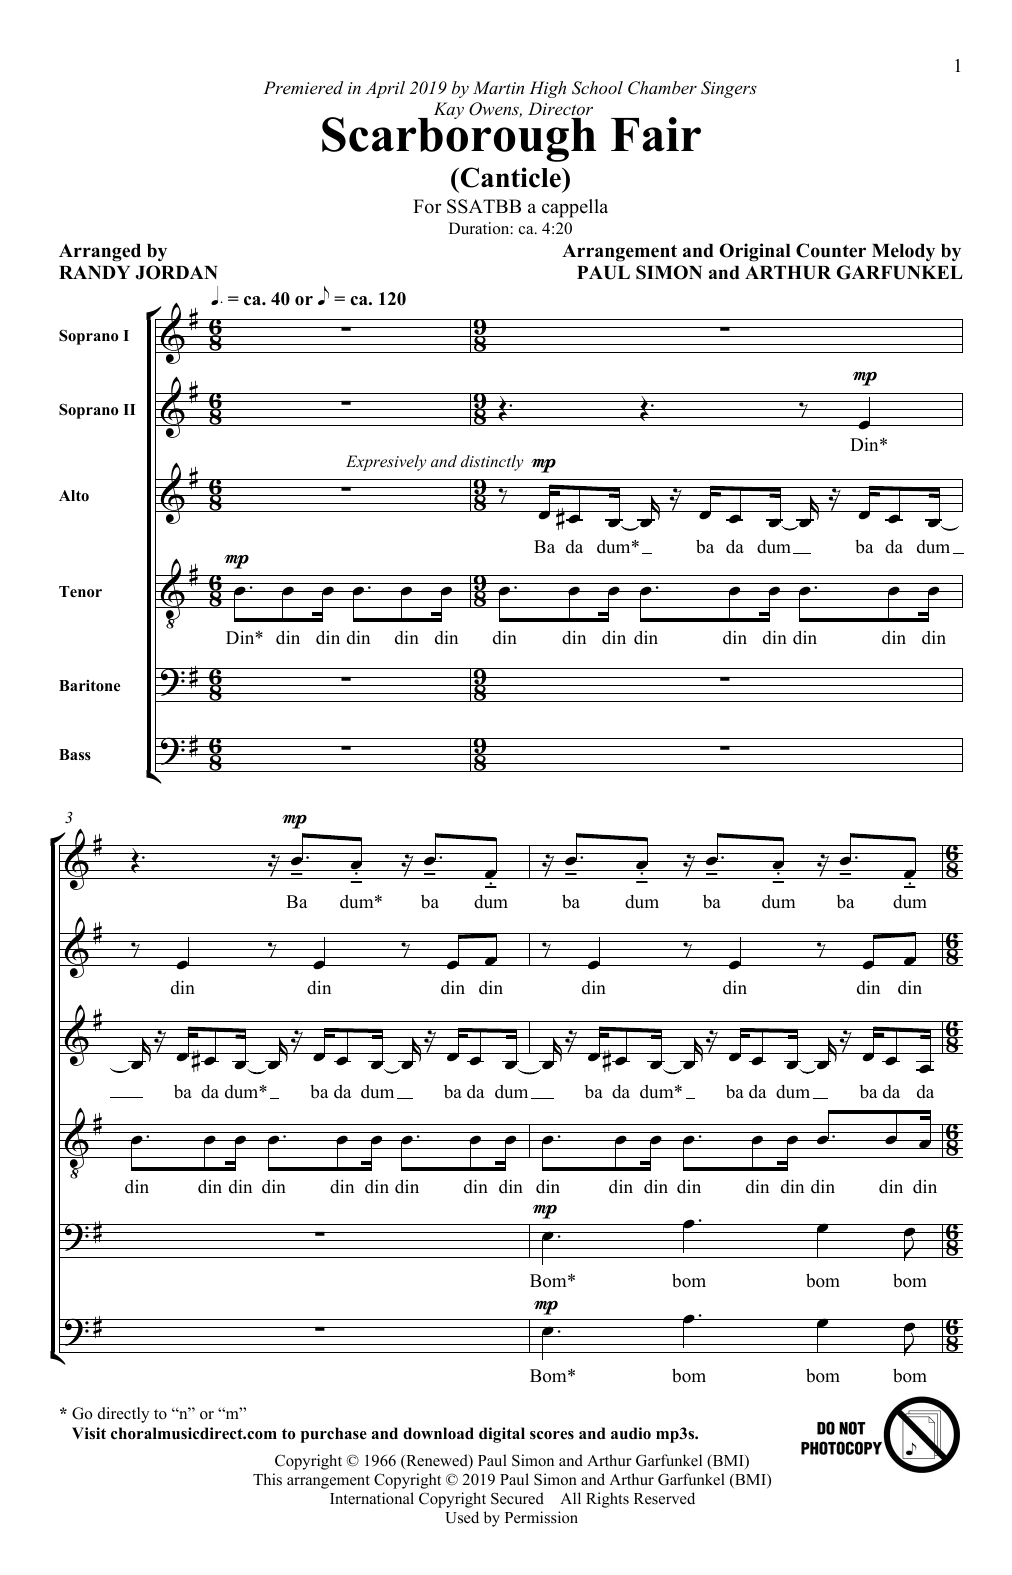 Simon & Garfunkel Scarborough Fair/Canticle (arr. Randy Jordan) sheet music notes and chords arranged for SSATBB Choir